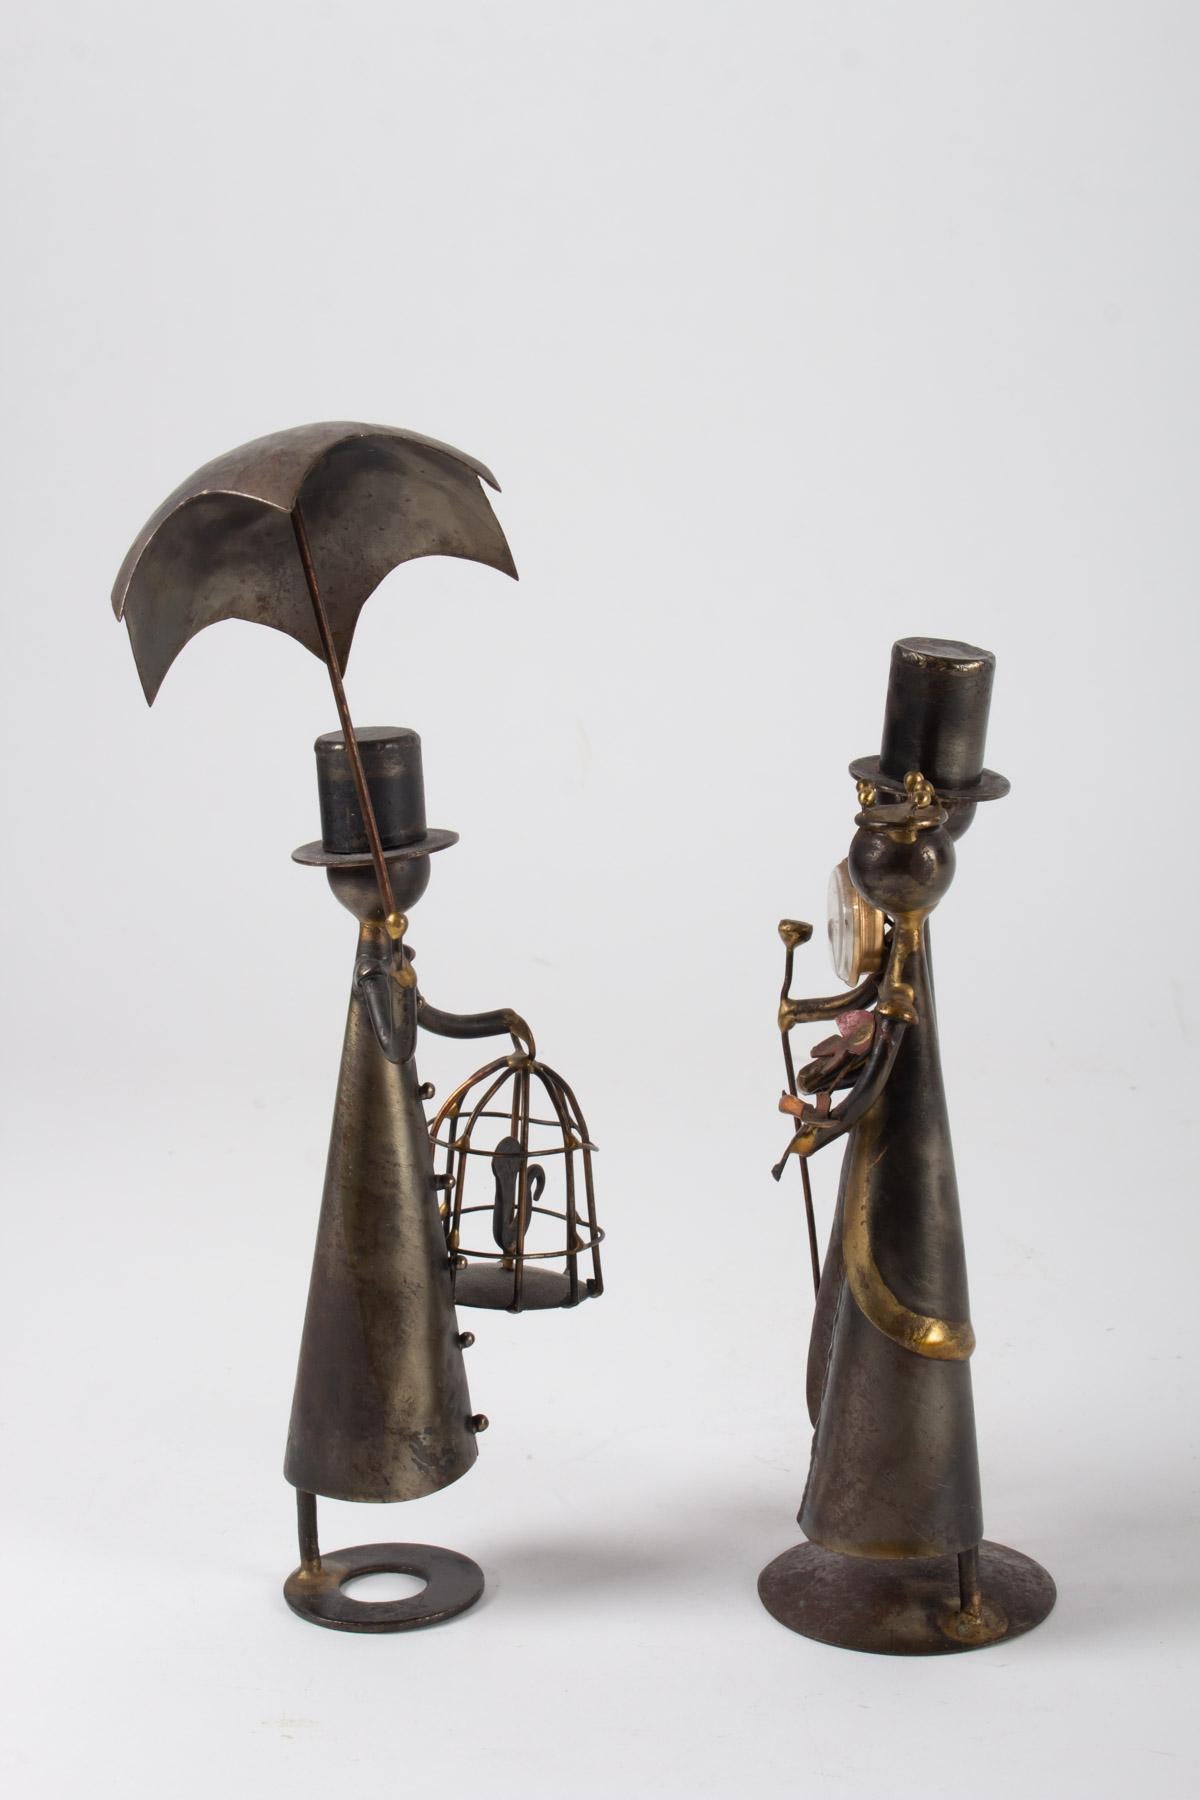 Sculpture, man with umbrella and couple thermometer, Belle Époque, 1900-1920, France, metal
Couple: H 20cm, W 8cm, W 7cm
Man with hat: H 24cm, W 12cm, W 8cm.